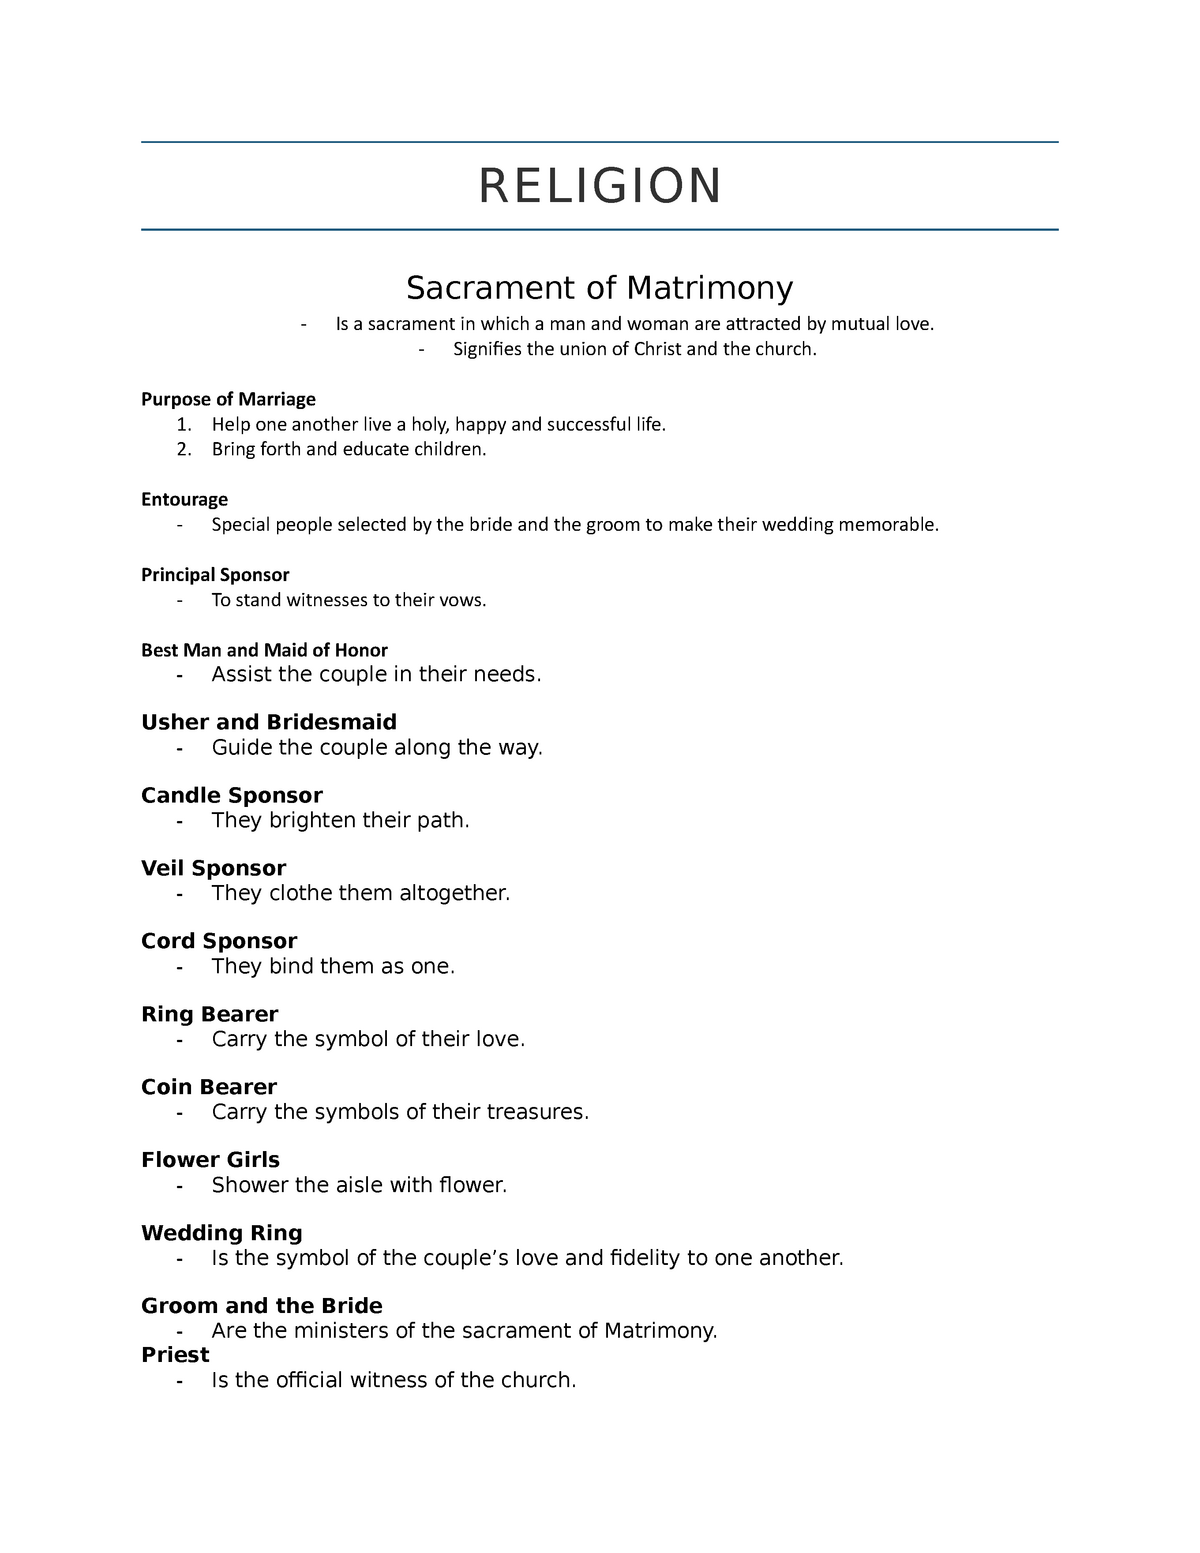 religion coursework sample